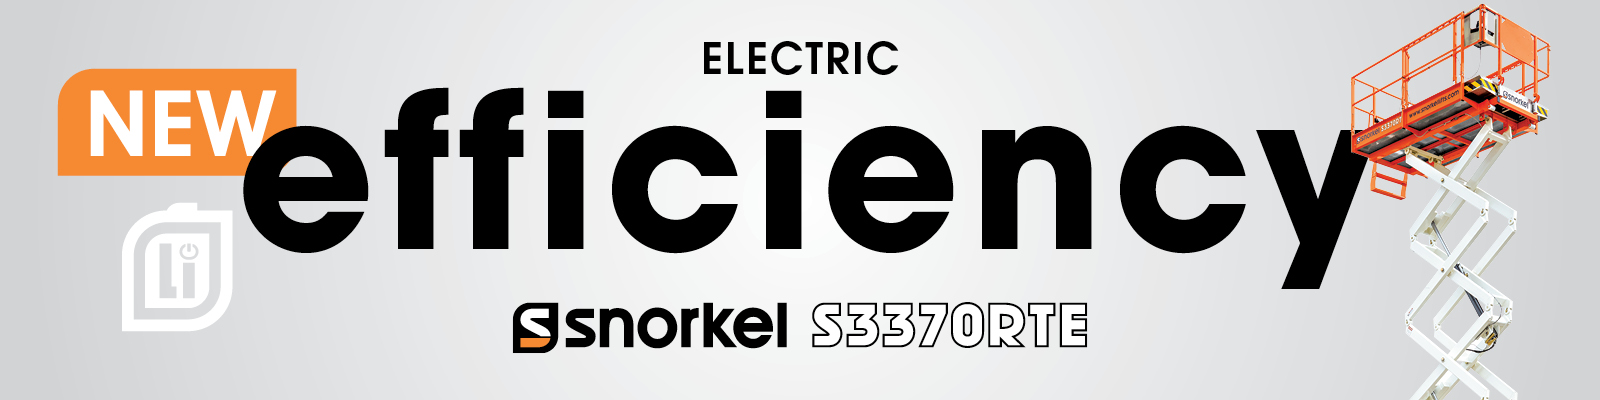 Electric Efficiency Snorkel S3370RTE rough terrain electric scissor lift